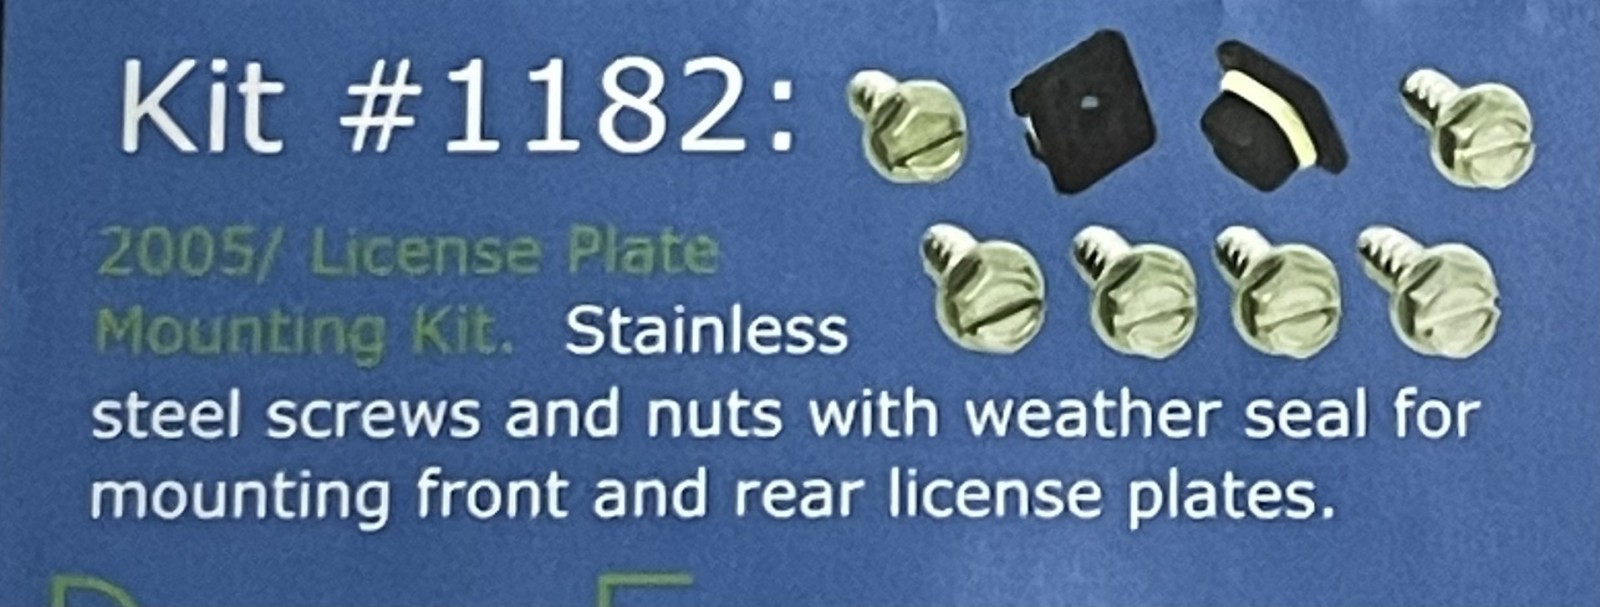 2005- license plate mount kit